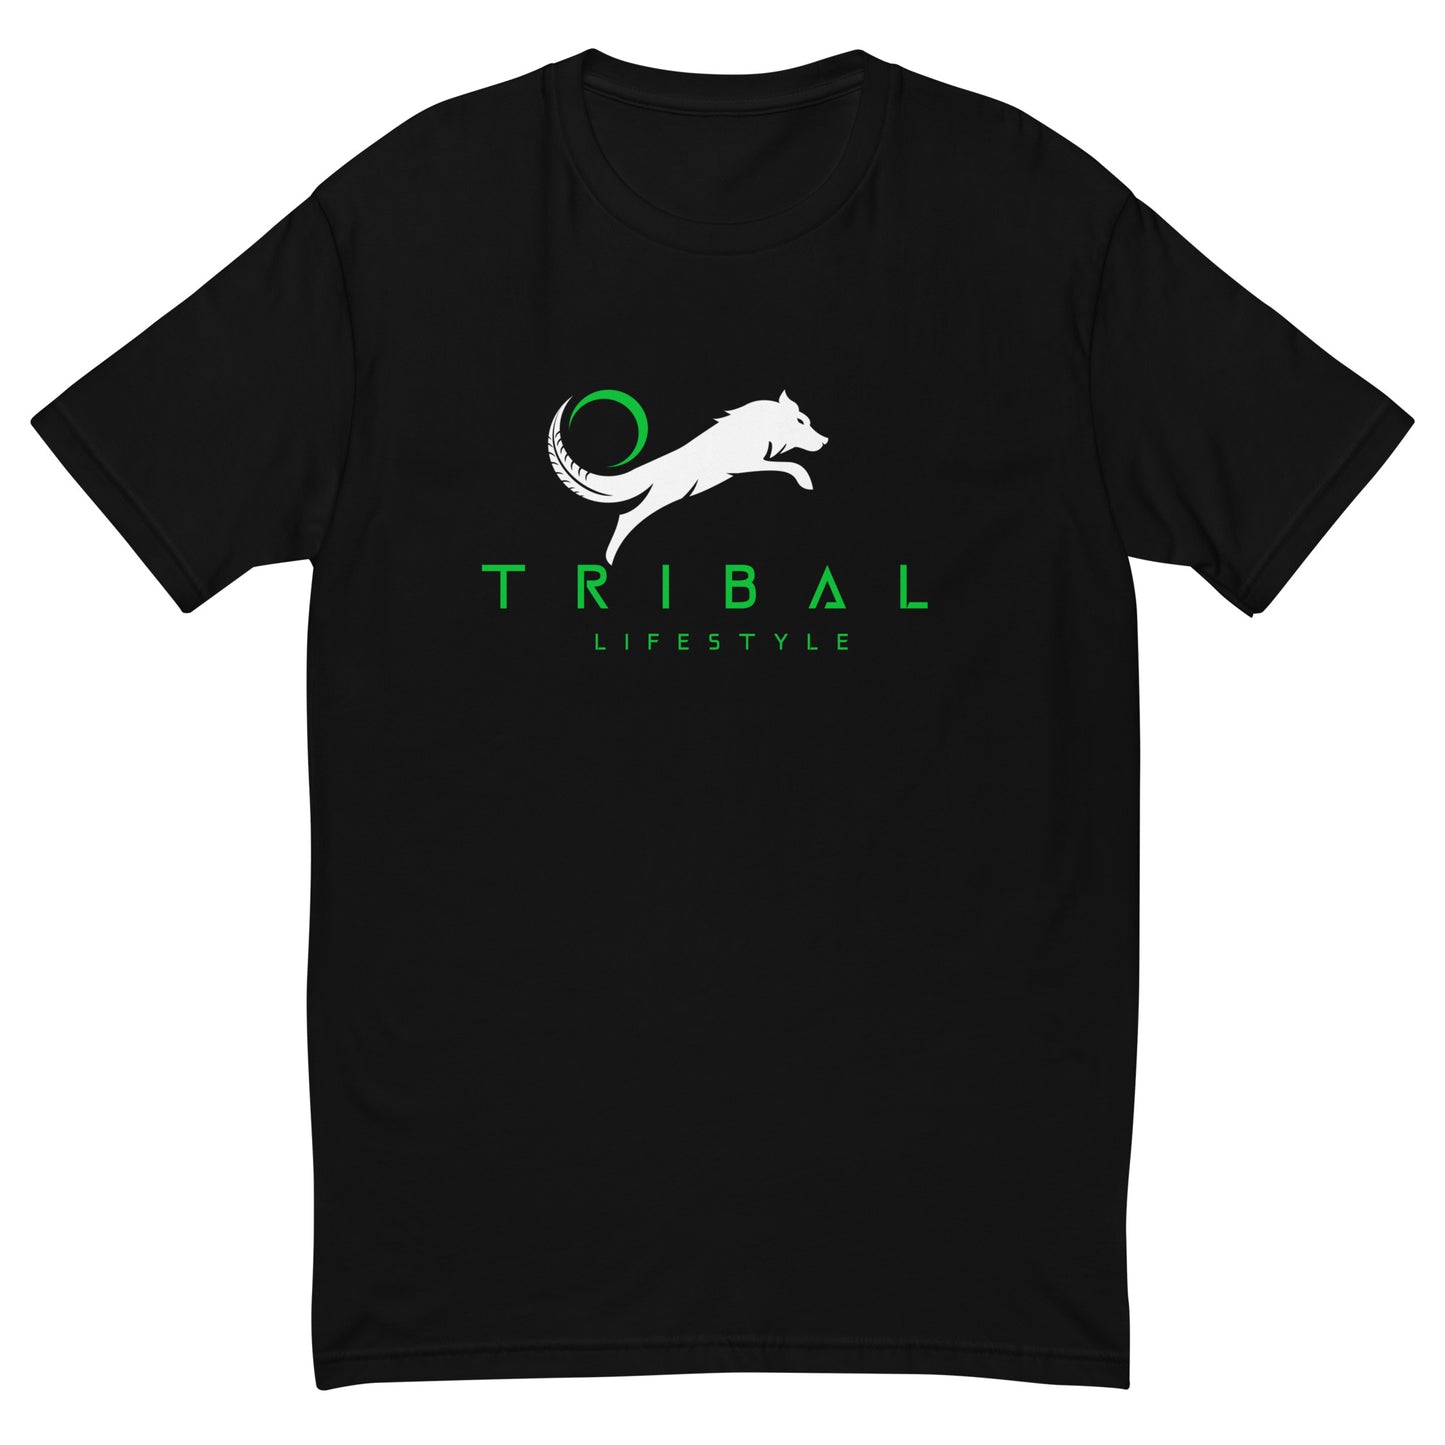 Flat mockup of Tribal lifestyle logo t-shirt